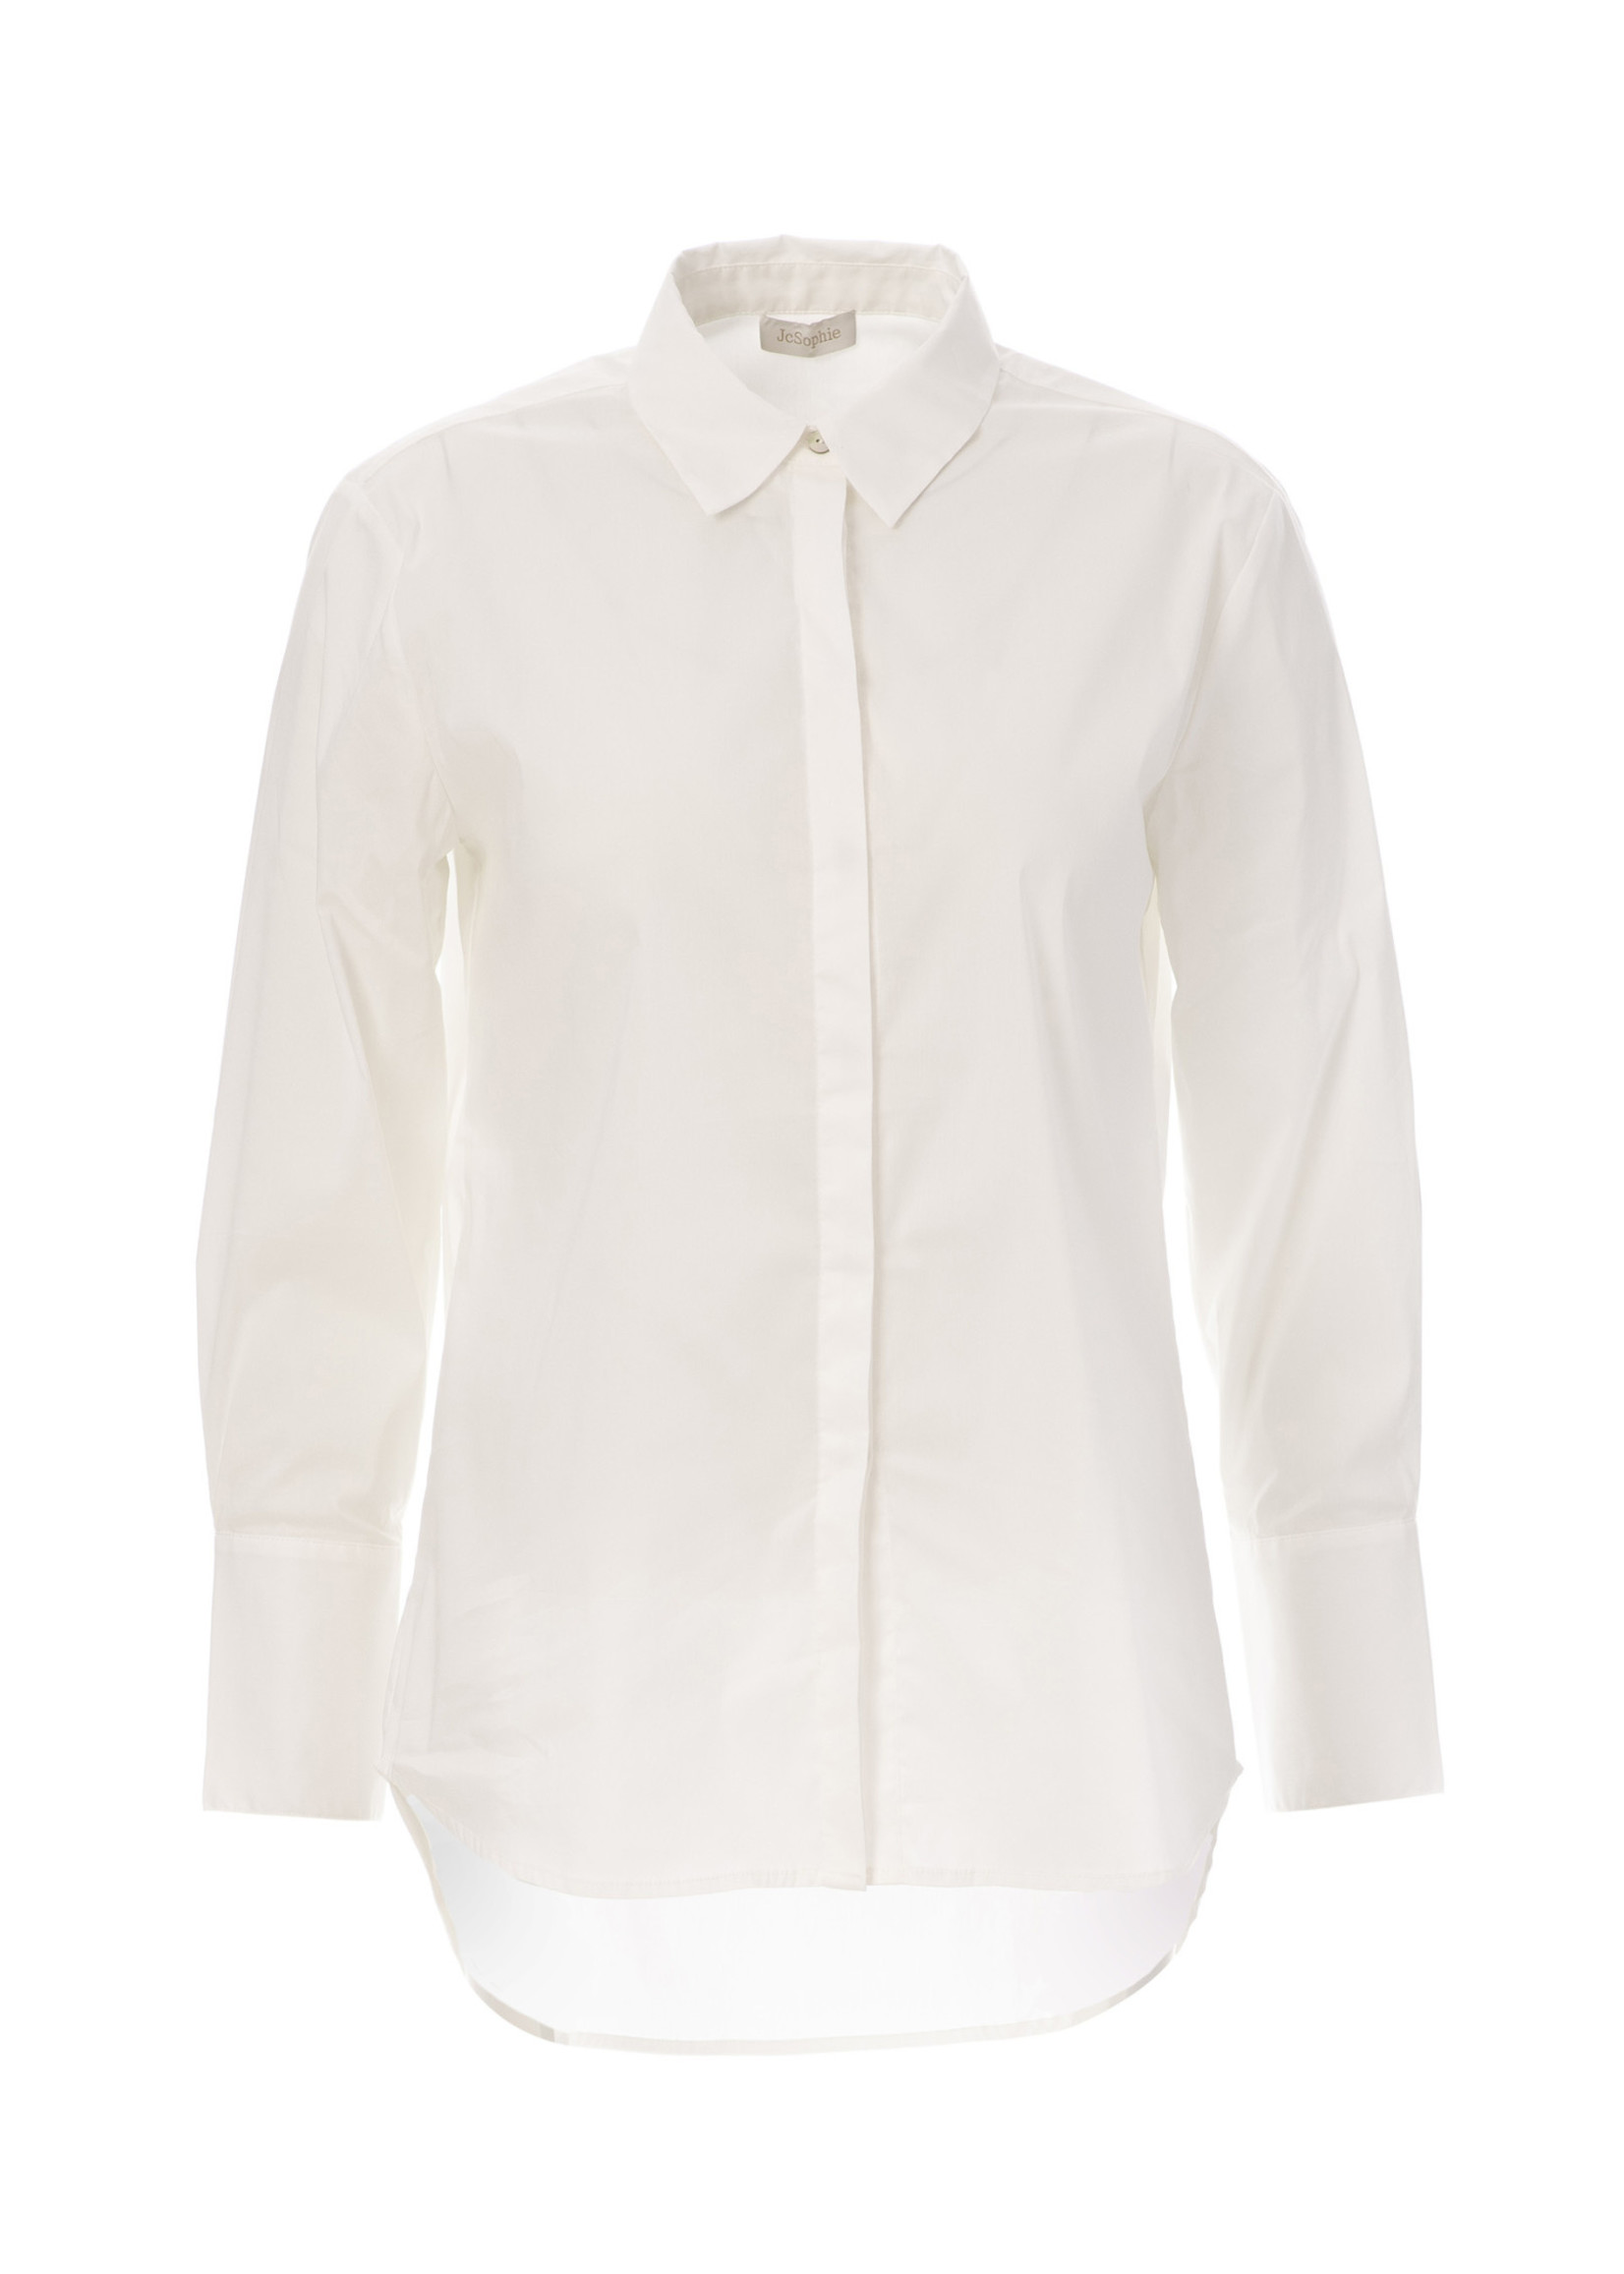 JC Sophie JC Sophie, Simple blouse, Off white